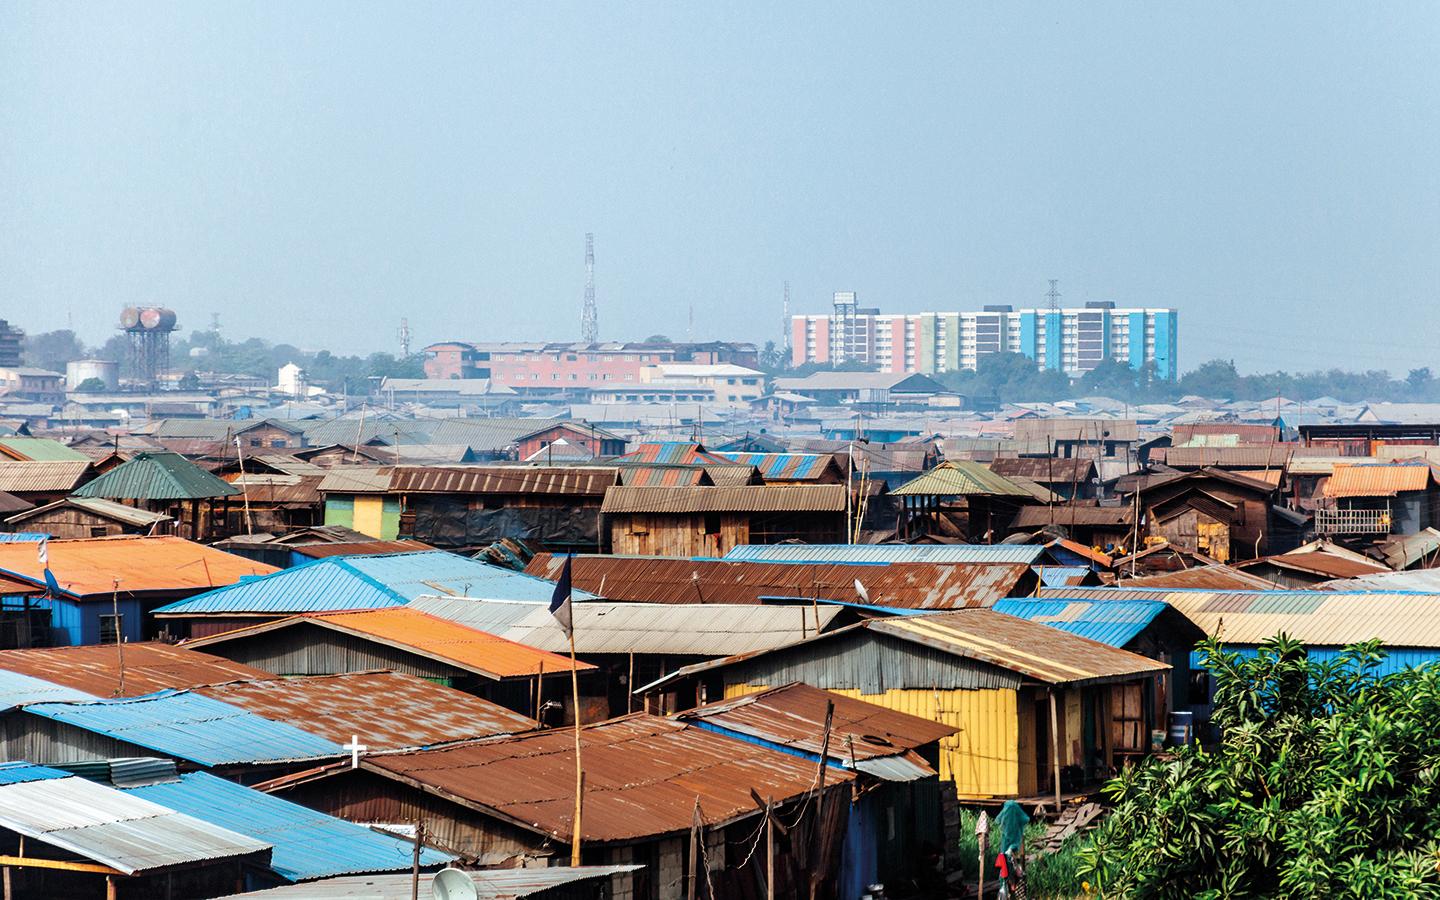 Slums and poverty in Nigeria